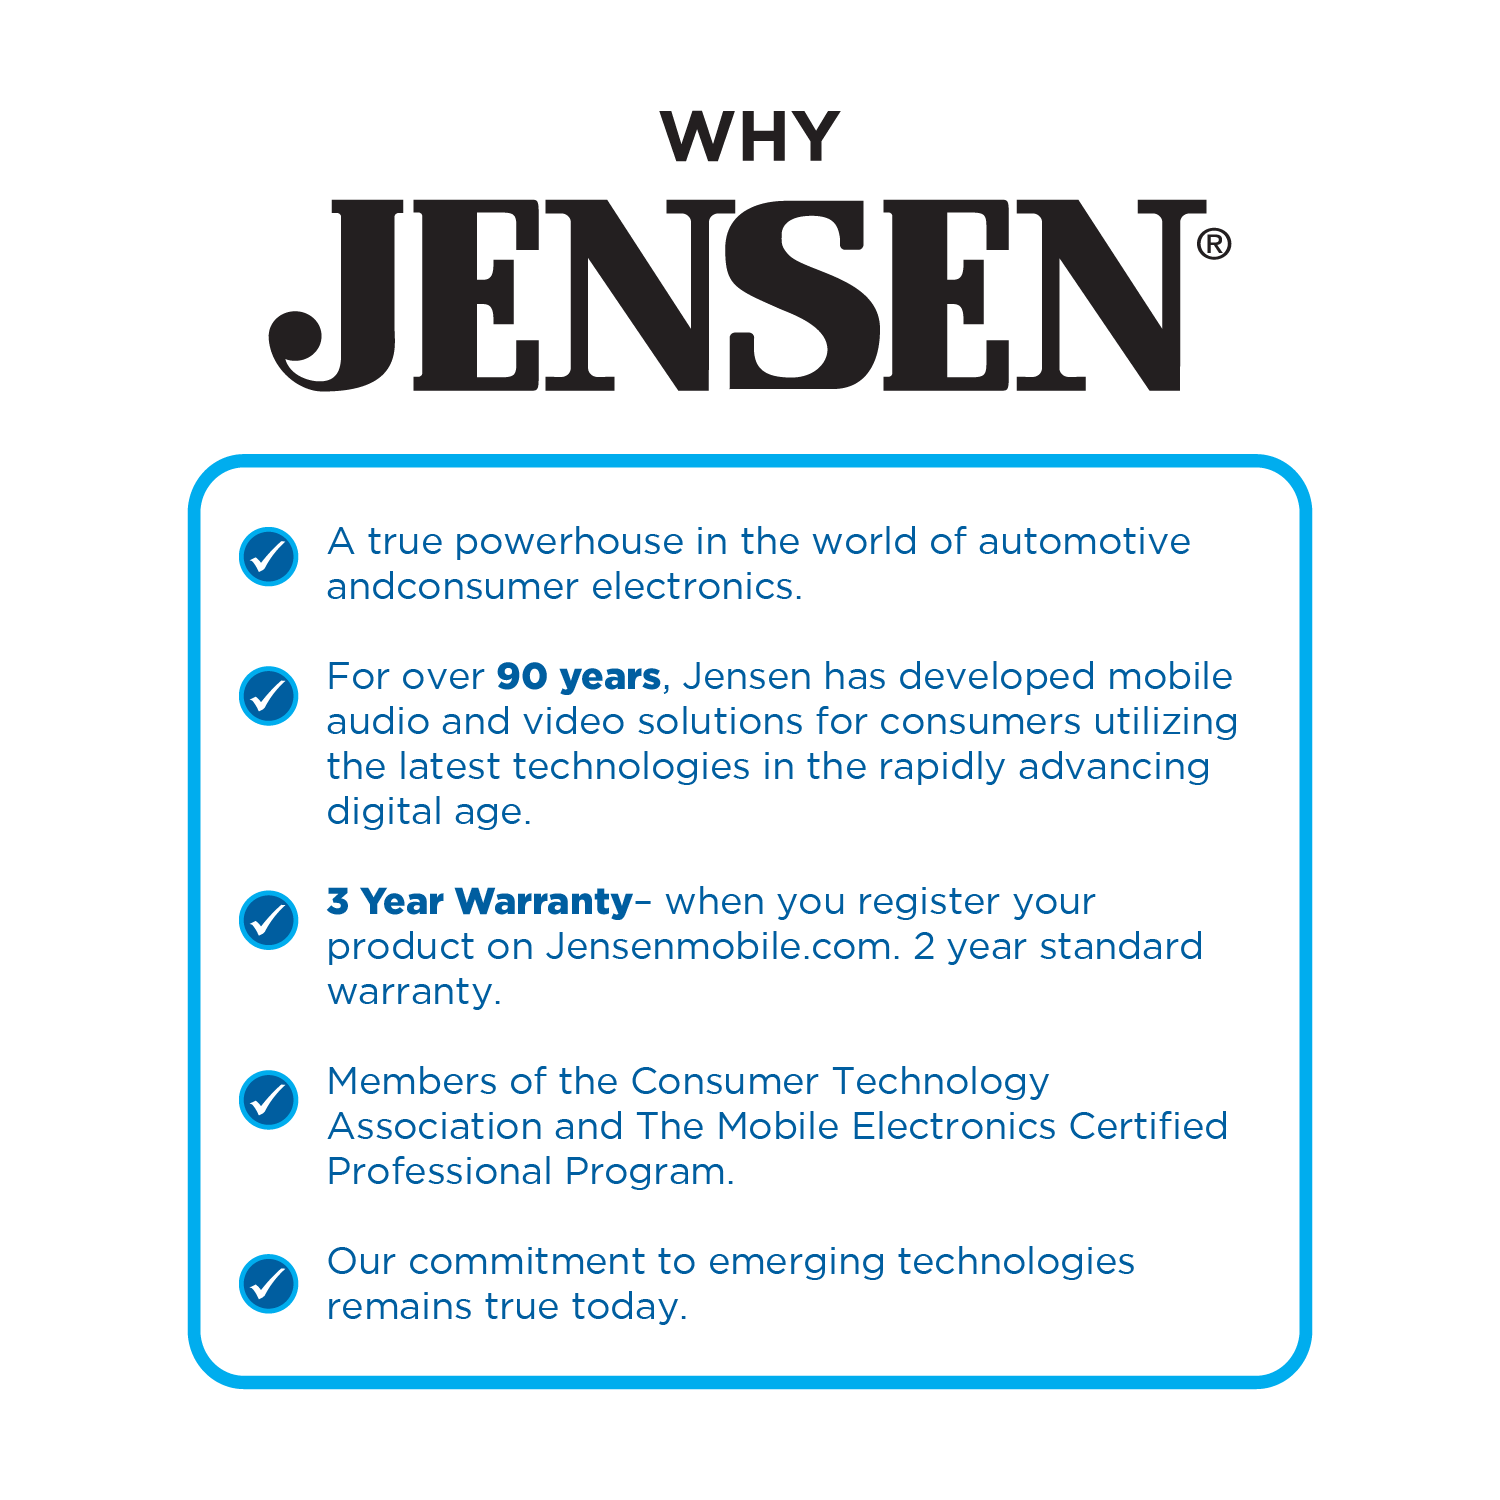 Jensen J12W 12 inch 1200 Watt Subwoofer 4-Ohm Car Audio Sub w/ 40oz. Magnet, 9 lbs., New - image 2 of 8